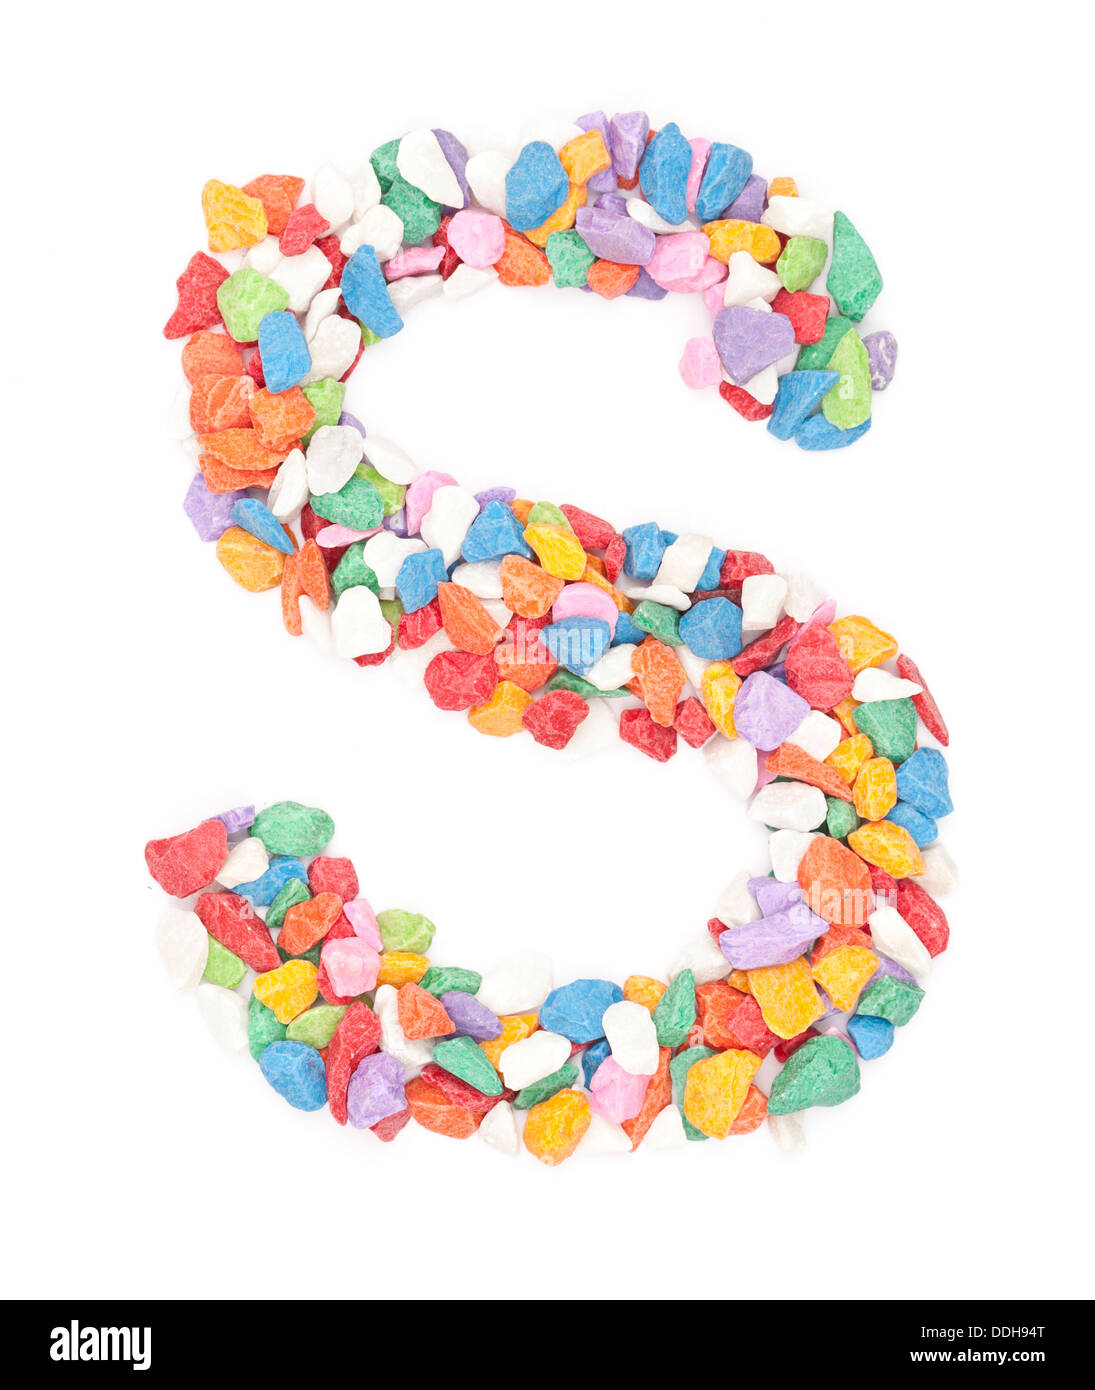 S alphabet colorful gravel on white background. Stock Photo